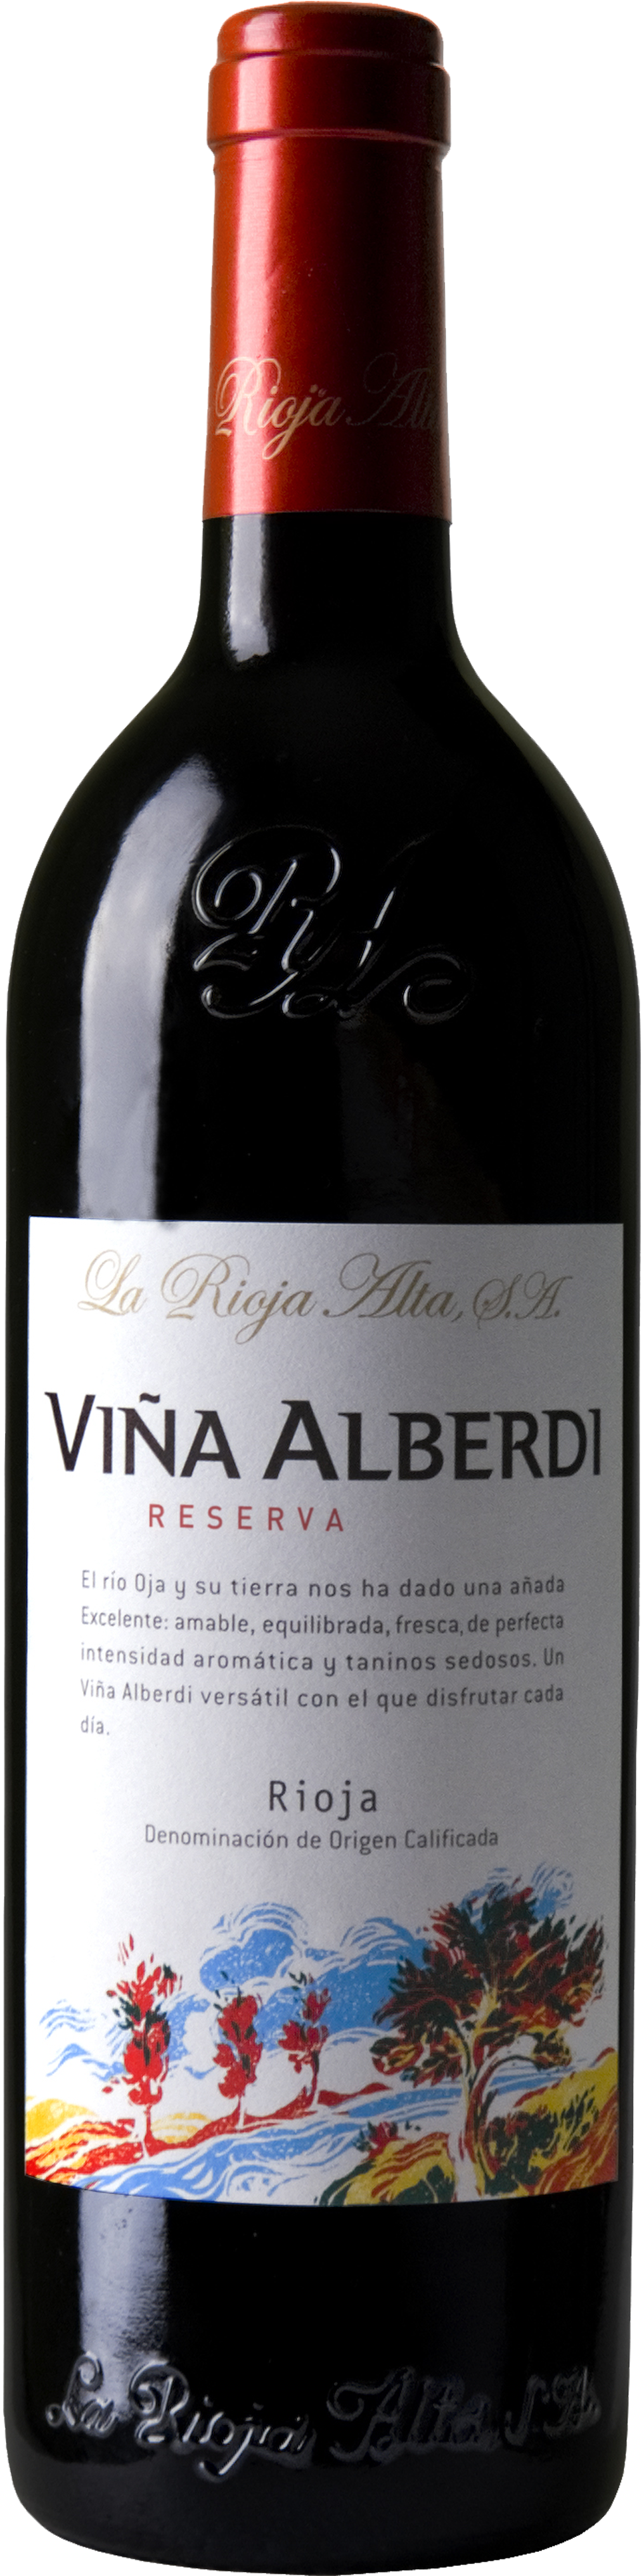 Bottle shot of 2005 Viña Alberdi Reserva